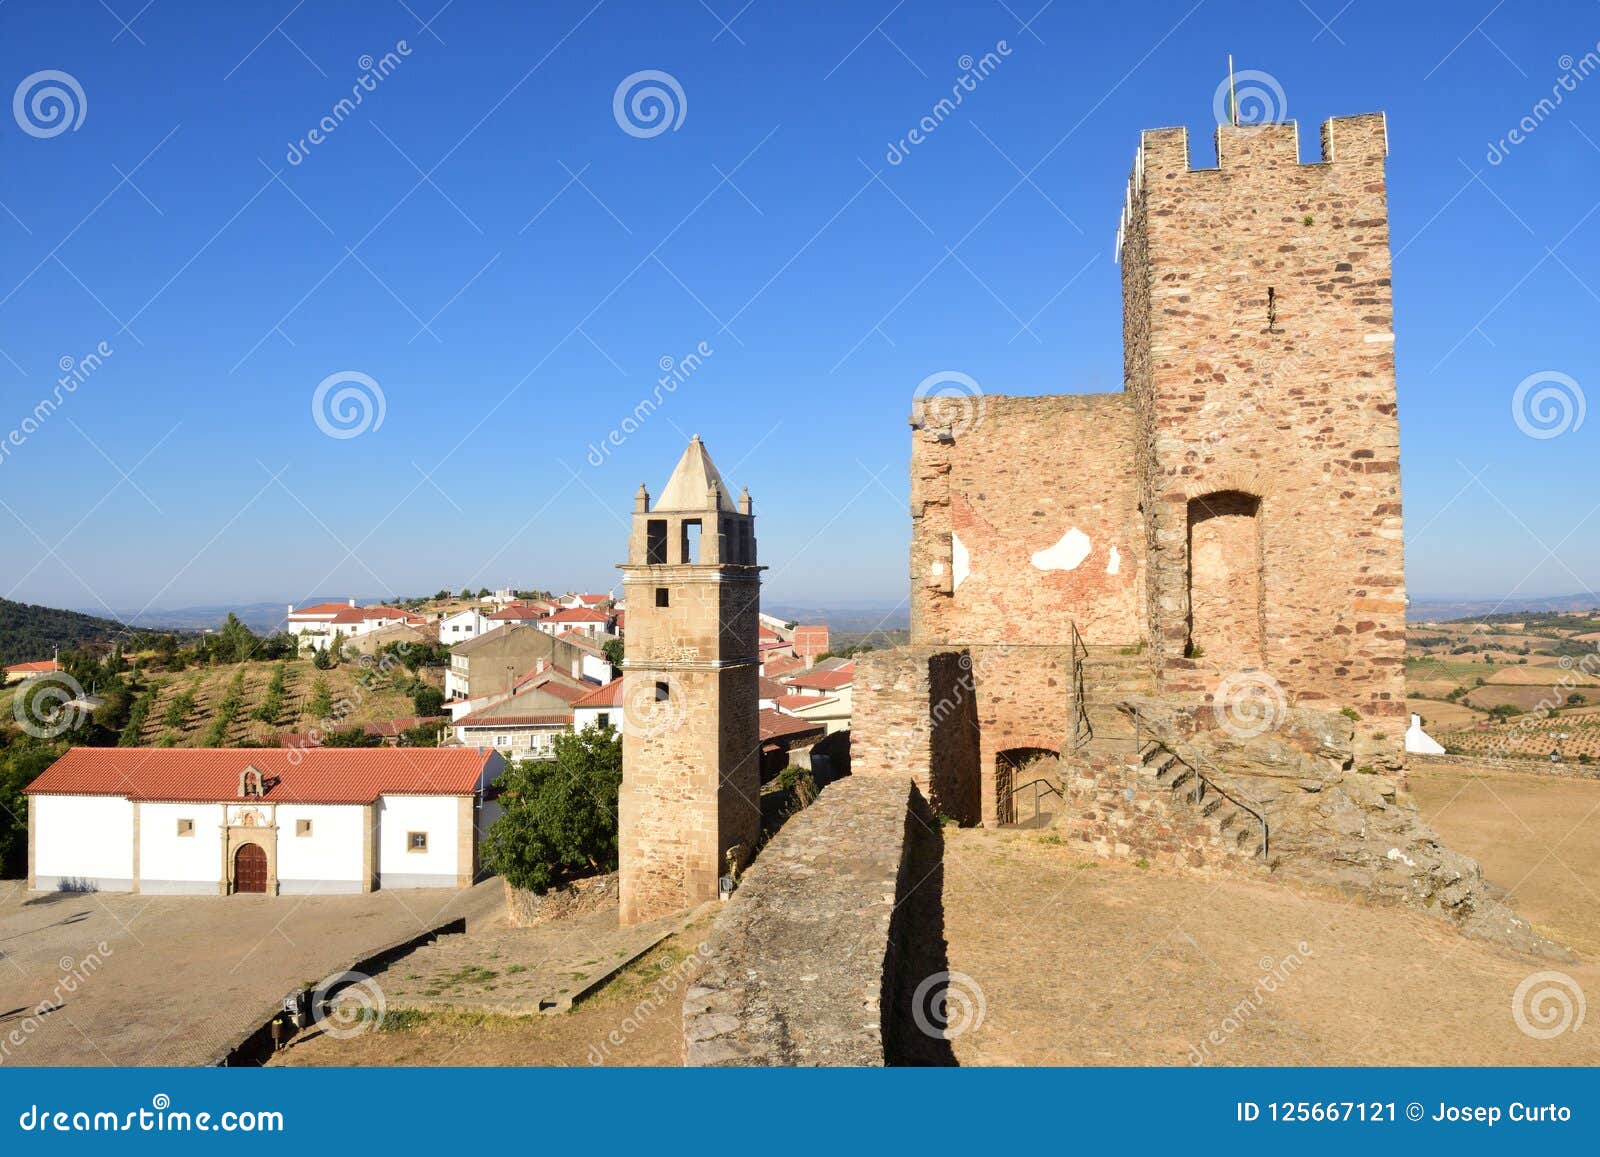 view of tower and the misericordia church, mogadouro, tras os montes, po